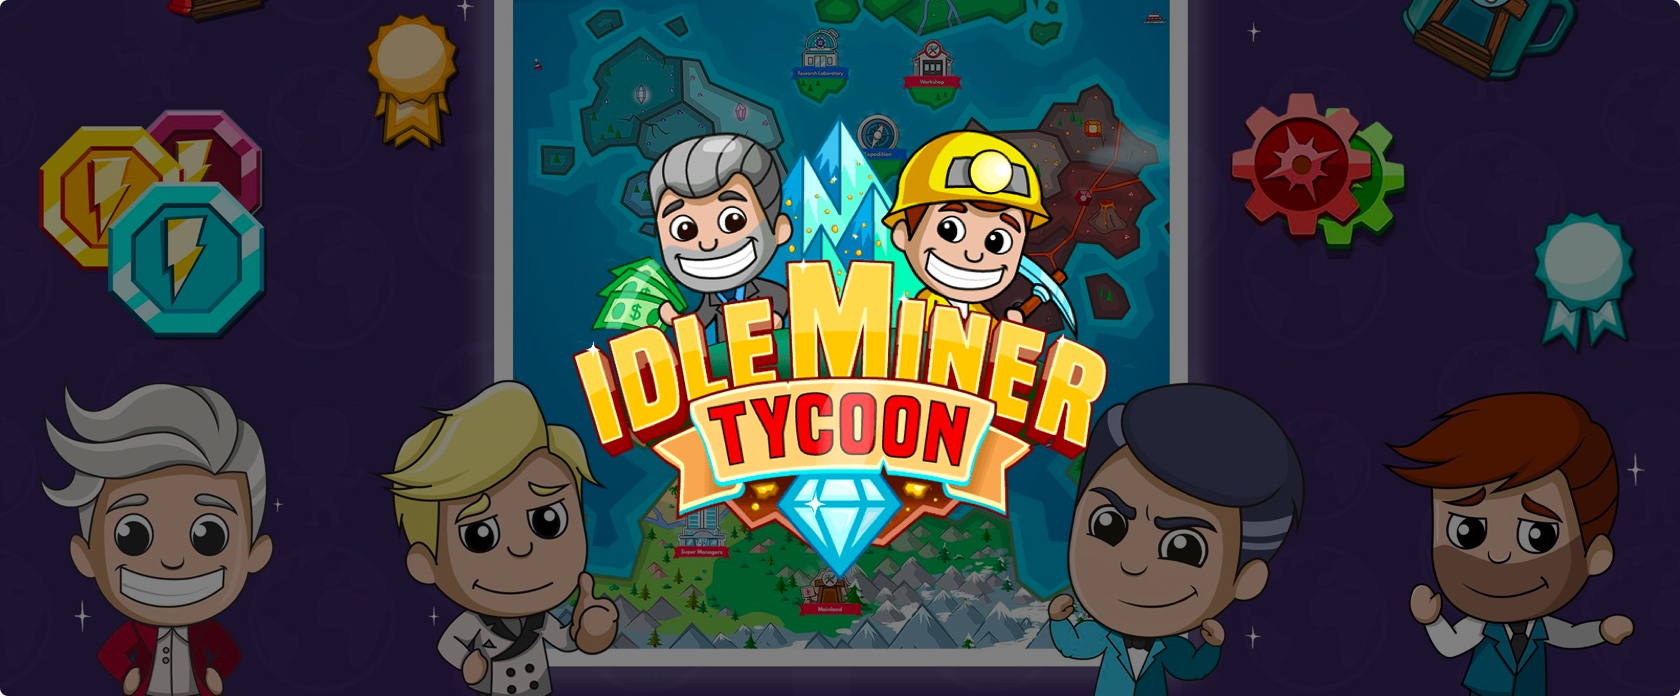 Idle Miner Tycoon promotion image